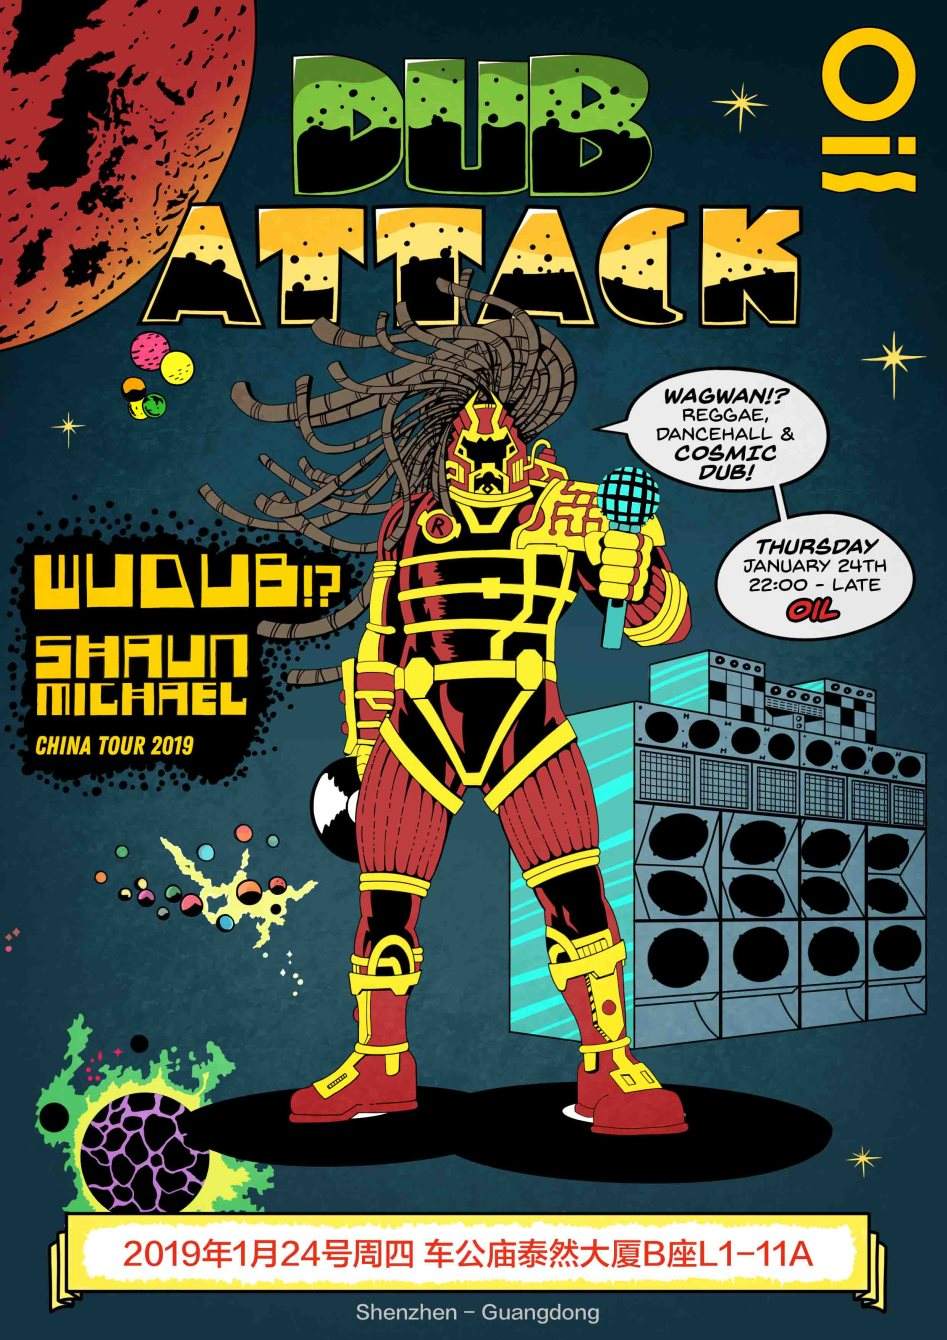 Dub Attack Pres. Wudub - Flyer front